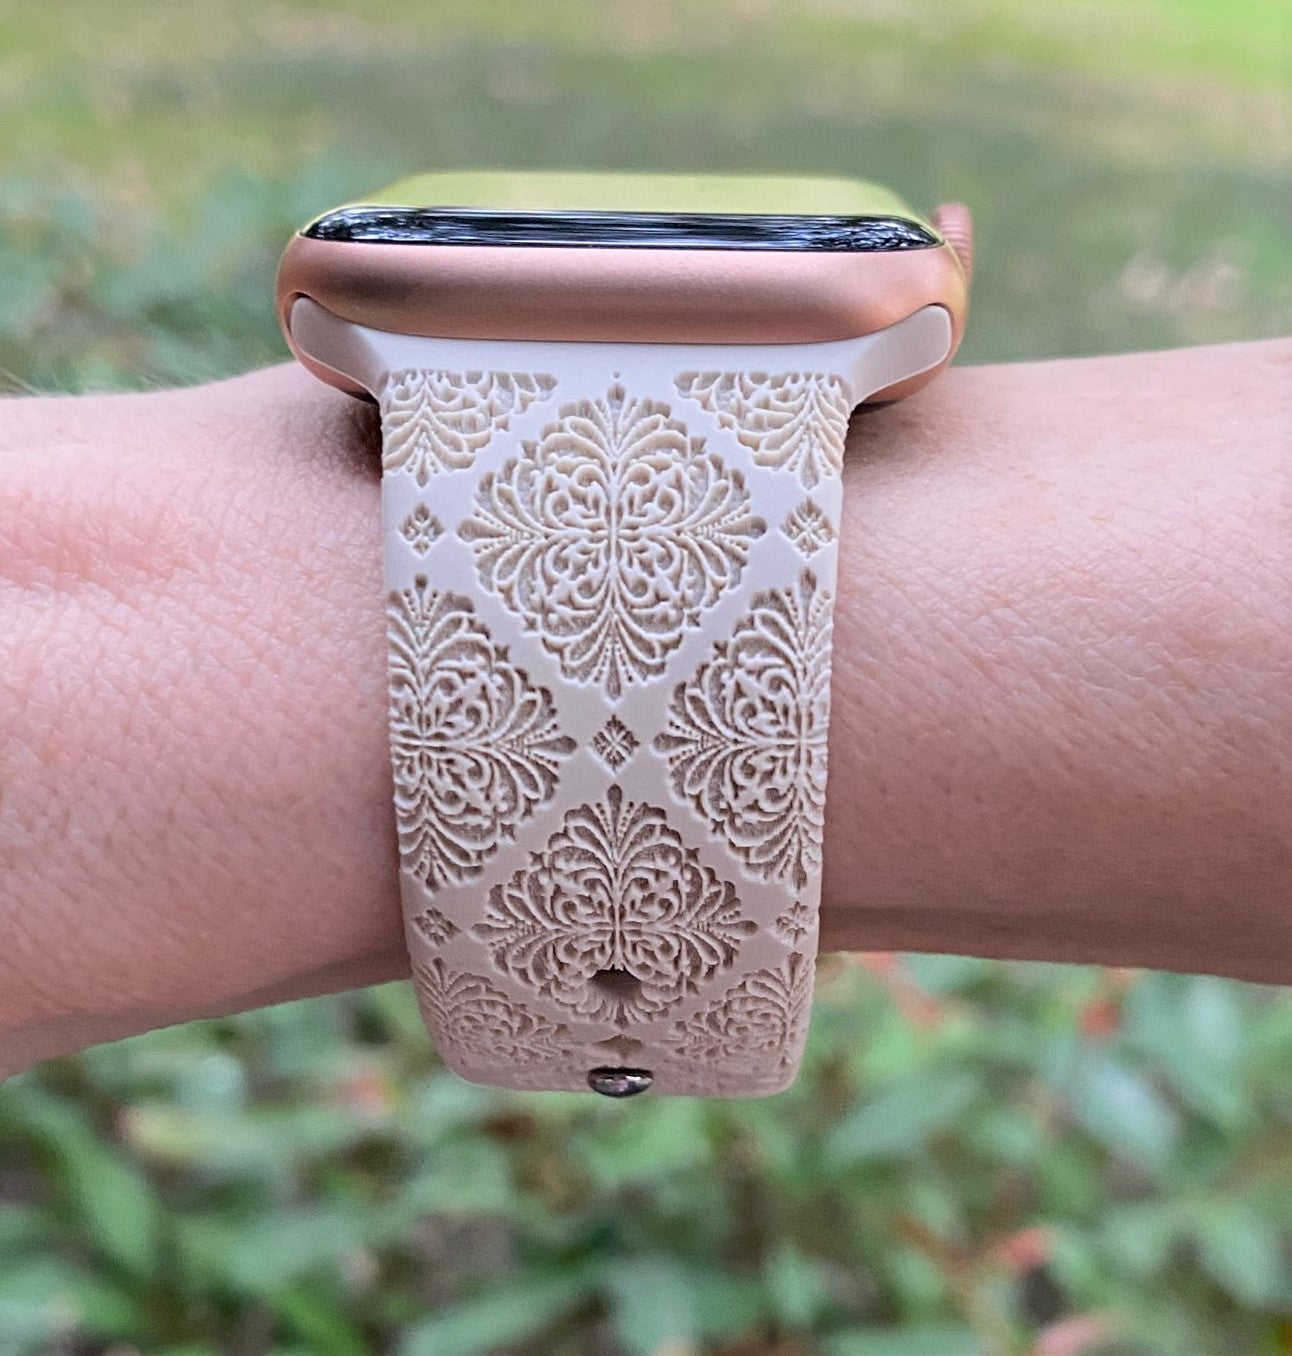 Lace Apple Watch Band